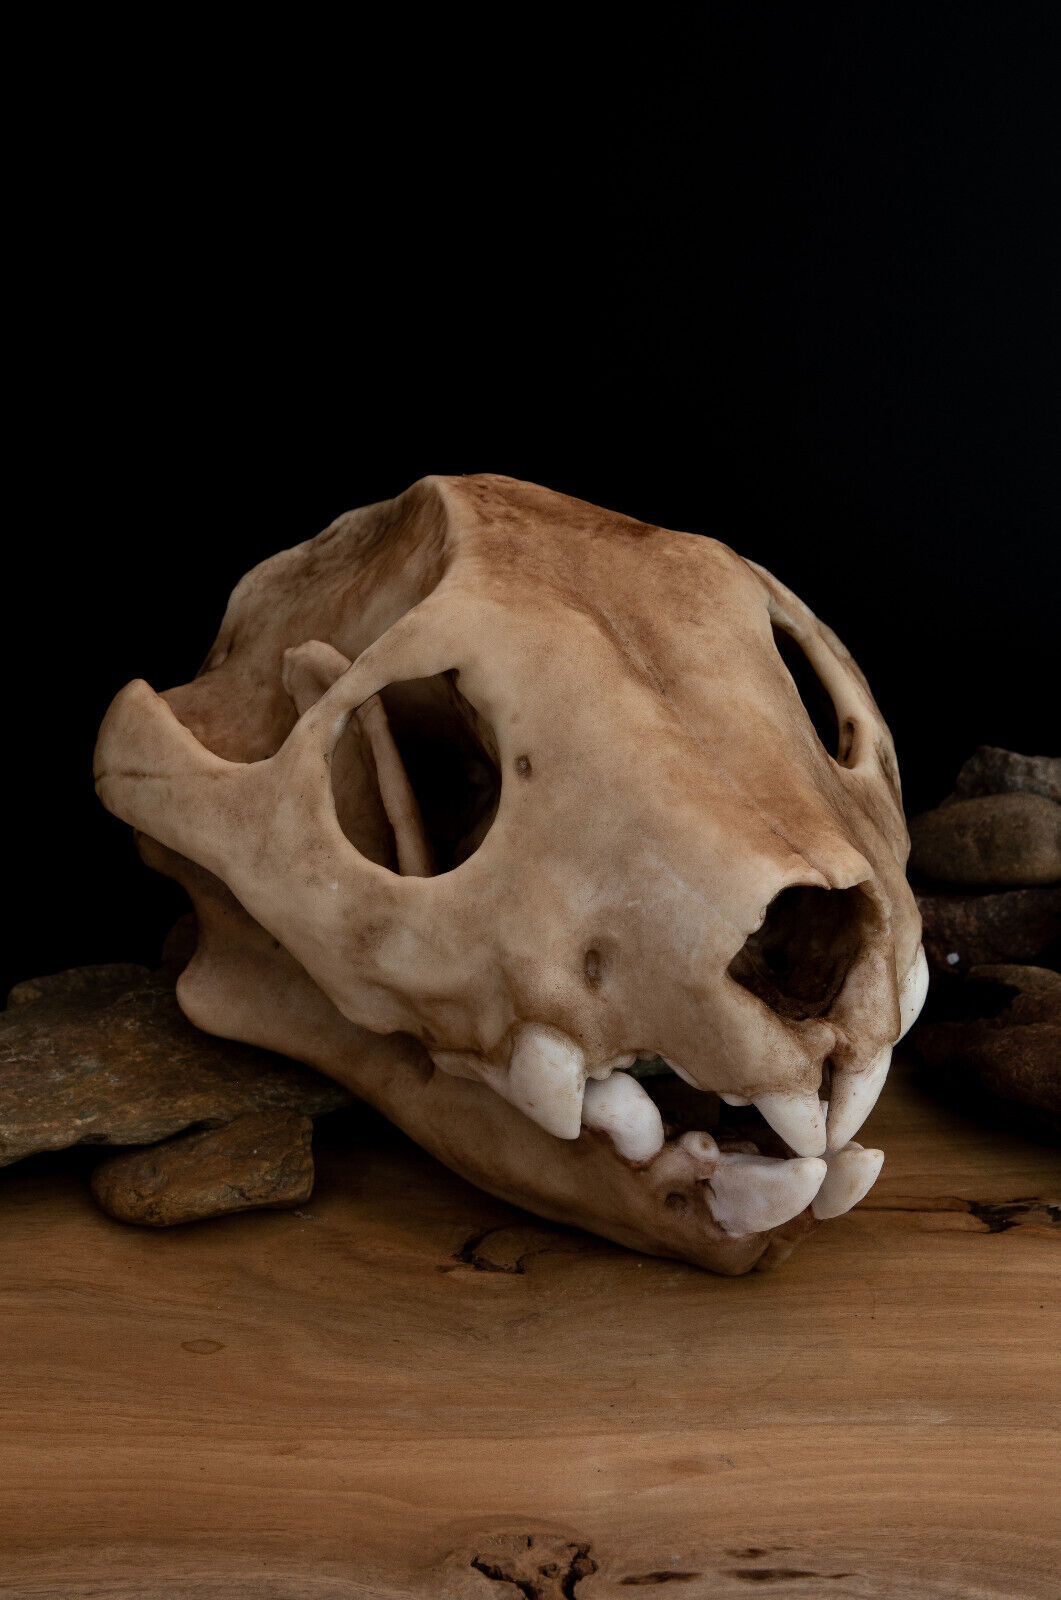 Australian Lion (Thylacoleo) Full Sized Large Skull-Replica - FREE delivery